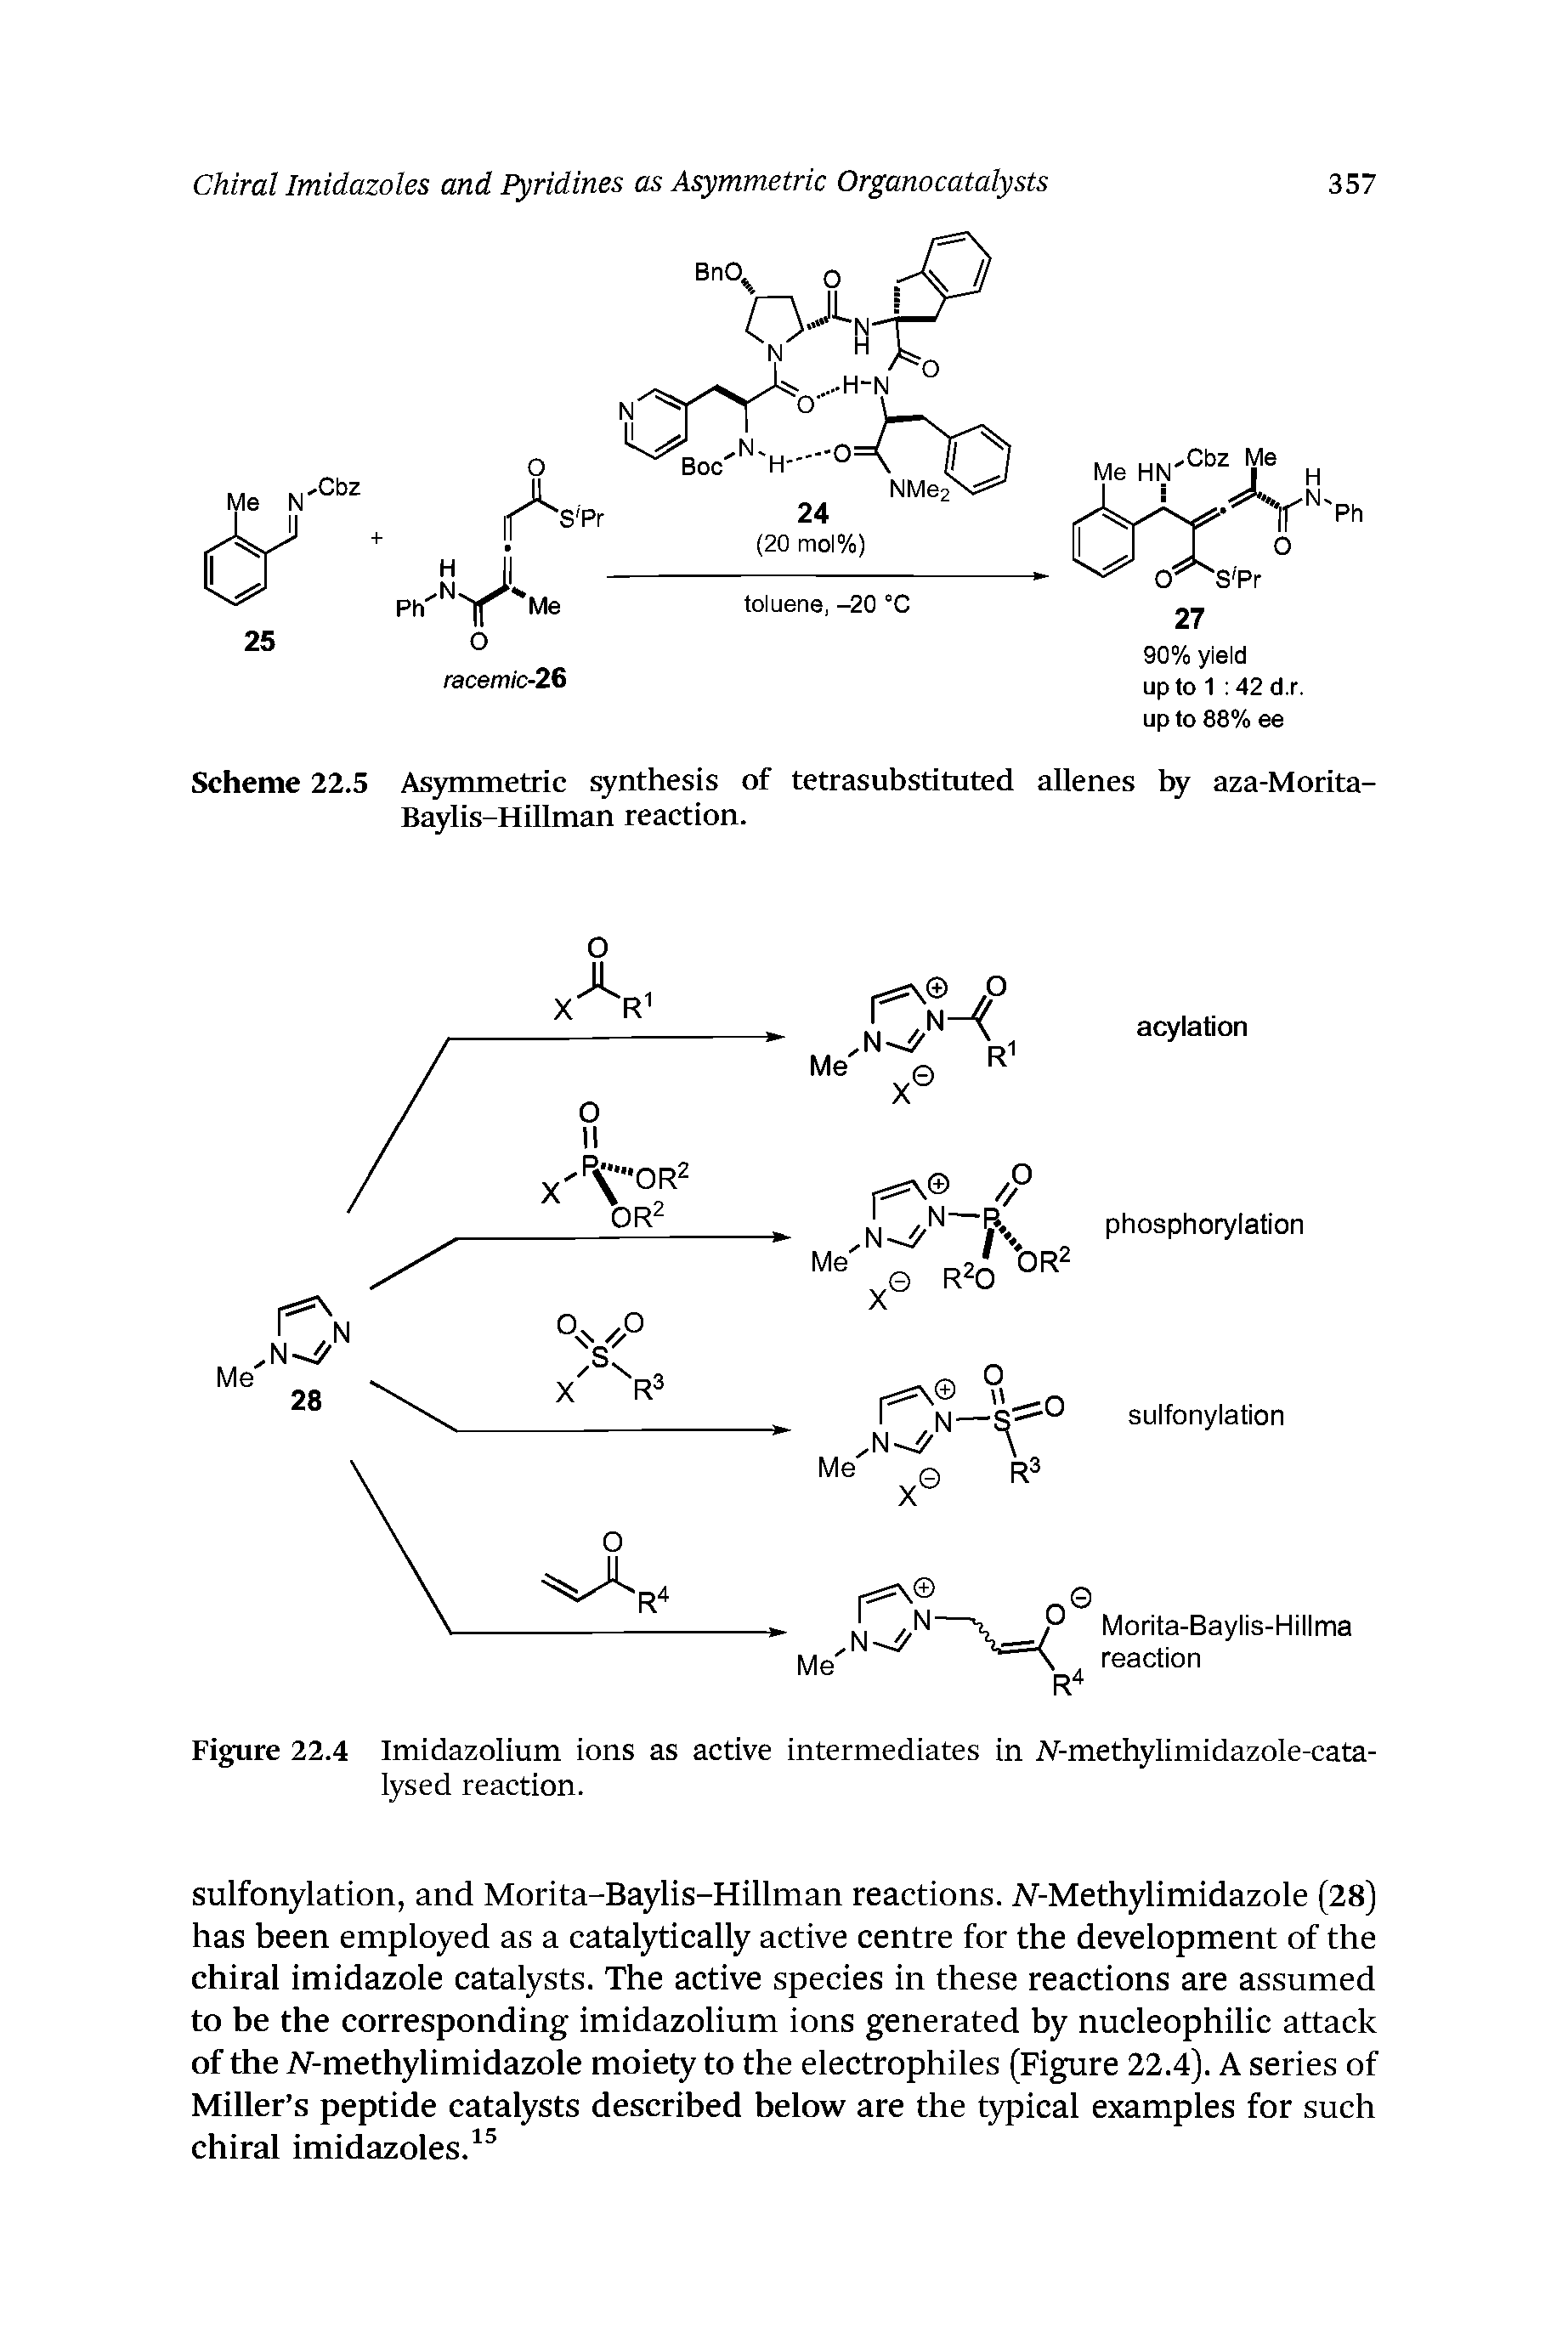 Scheme 22.5 As5tmmetric synthesis of tetrasubstituted allenes by aza-Morita-Baylis-Hillman reaction.